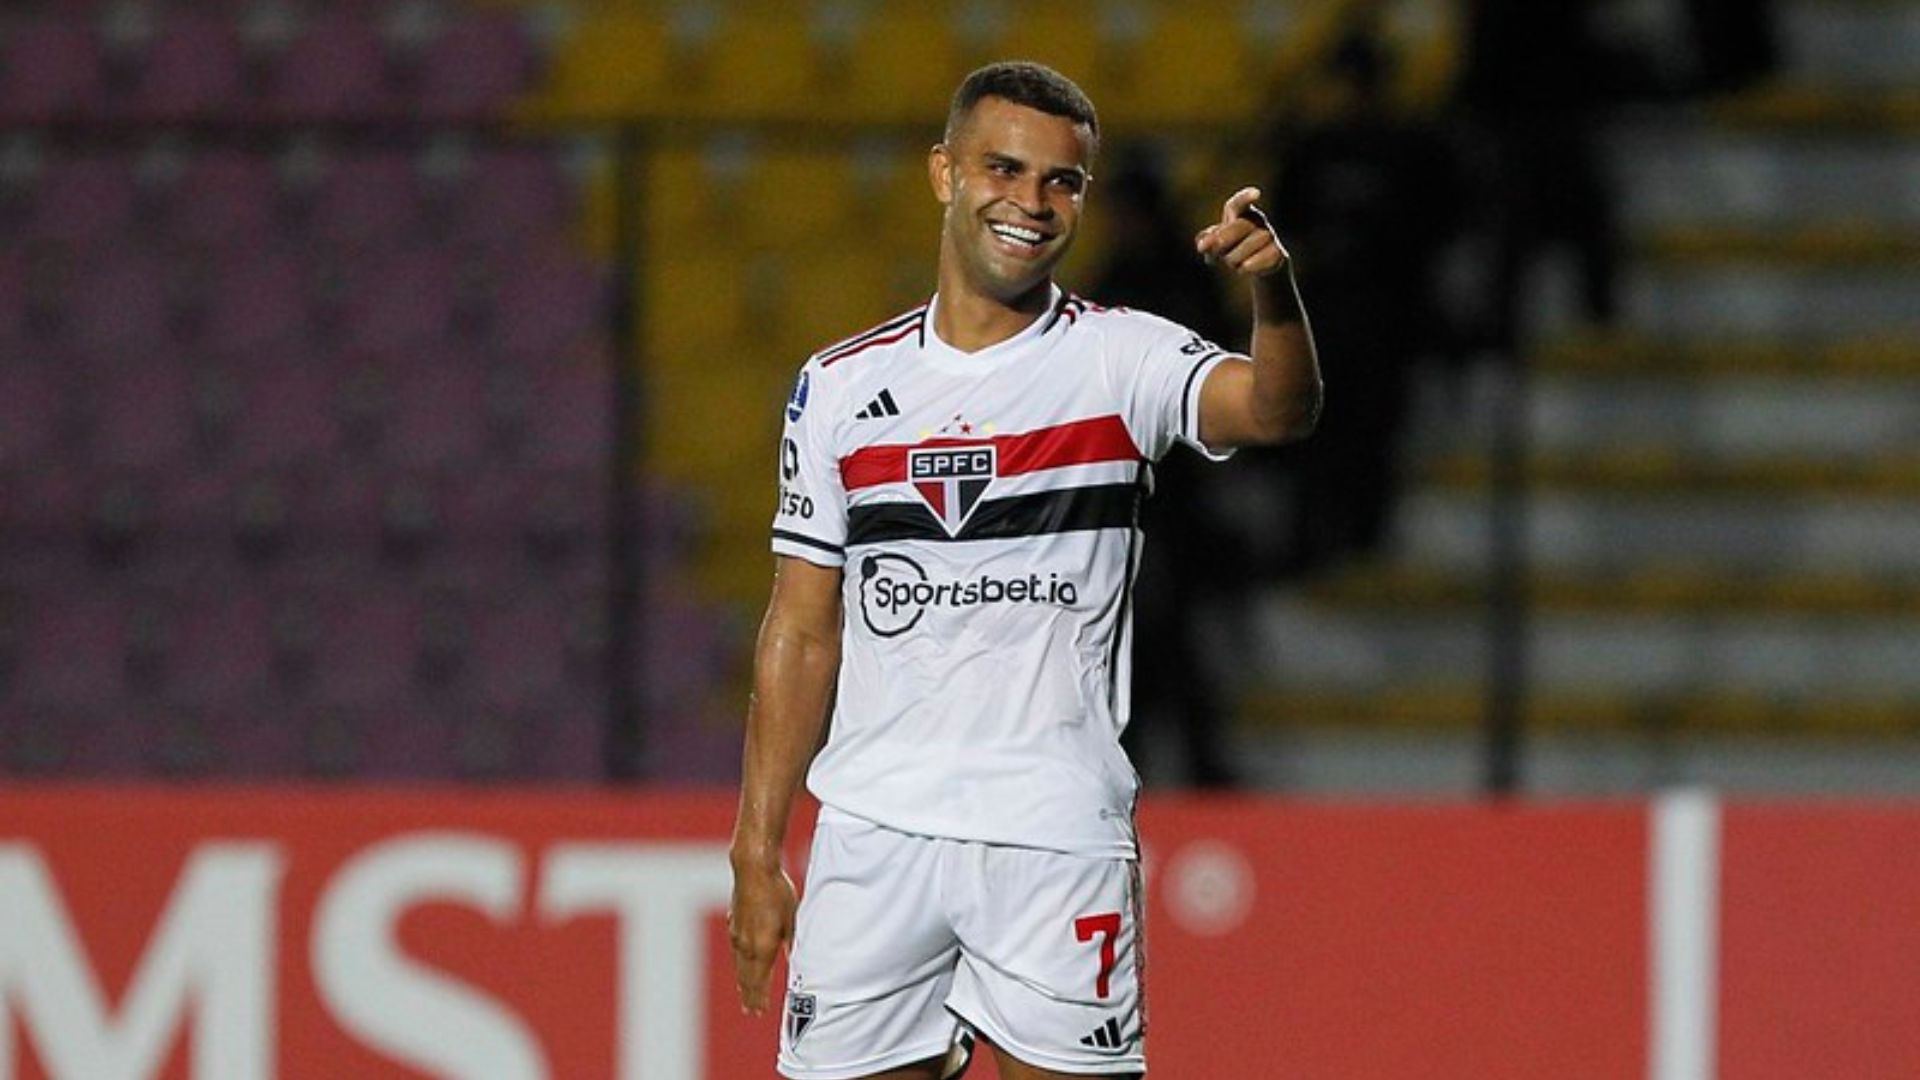 Alisson scored a goal for Sao Paulo